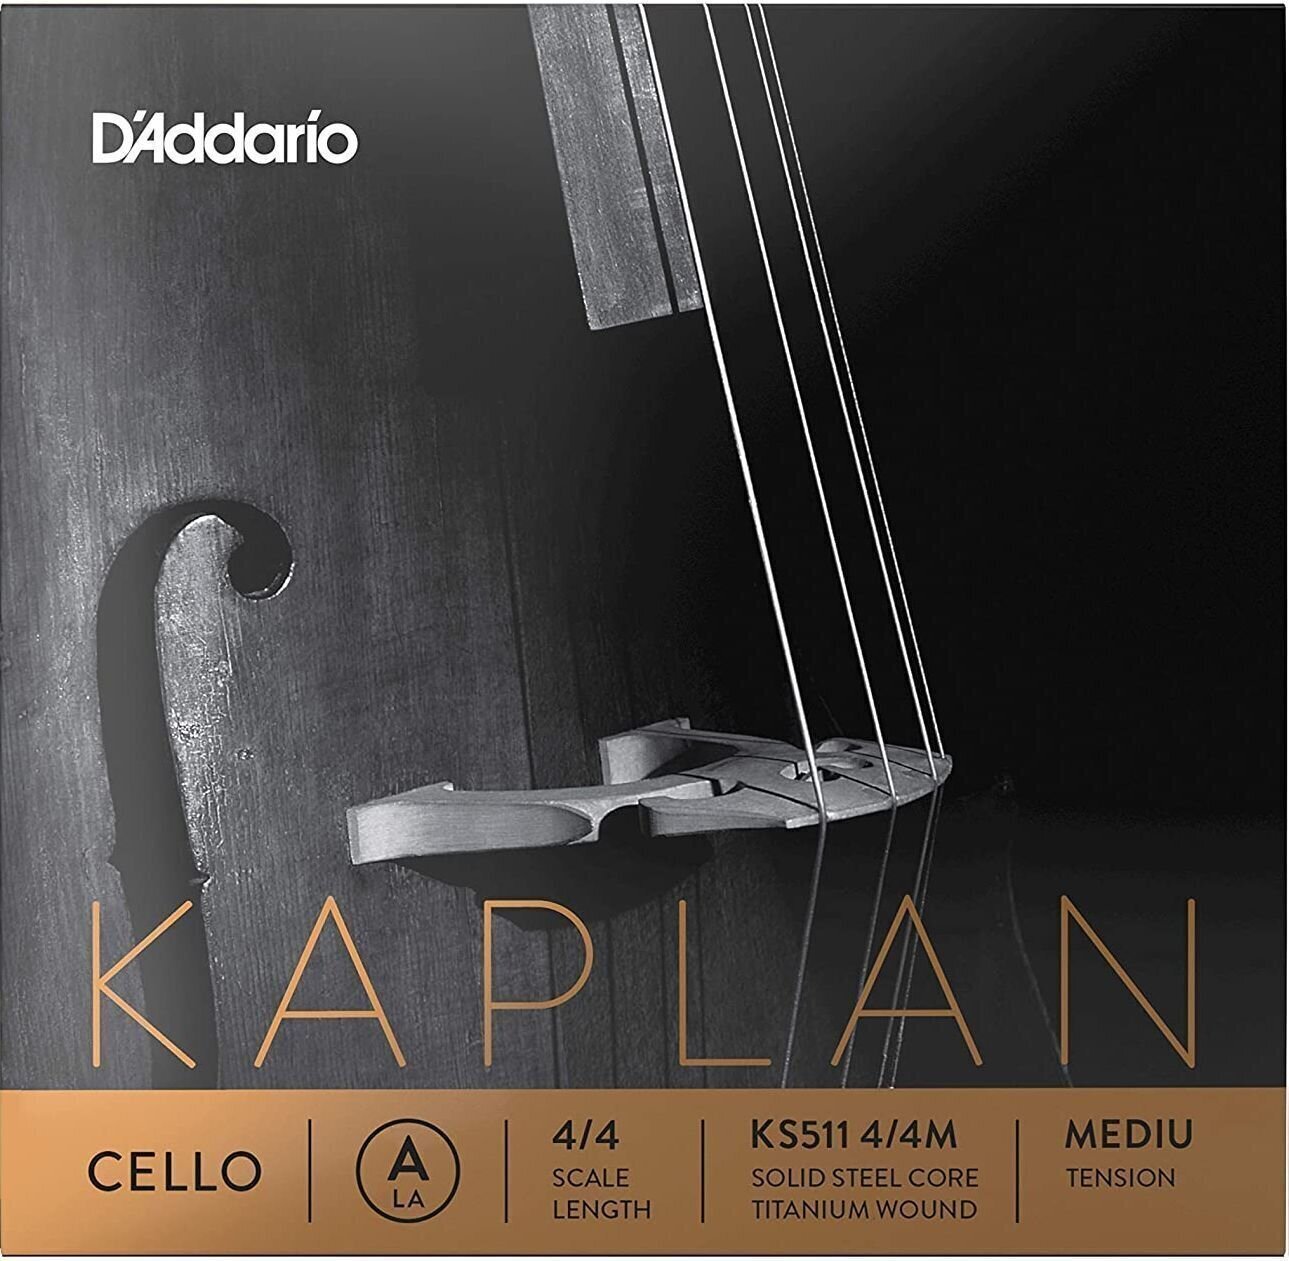 Cello-strenge Kaplan KS511 4/4M Cello-strenge